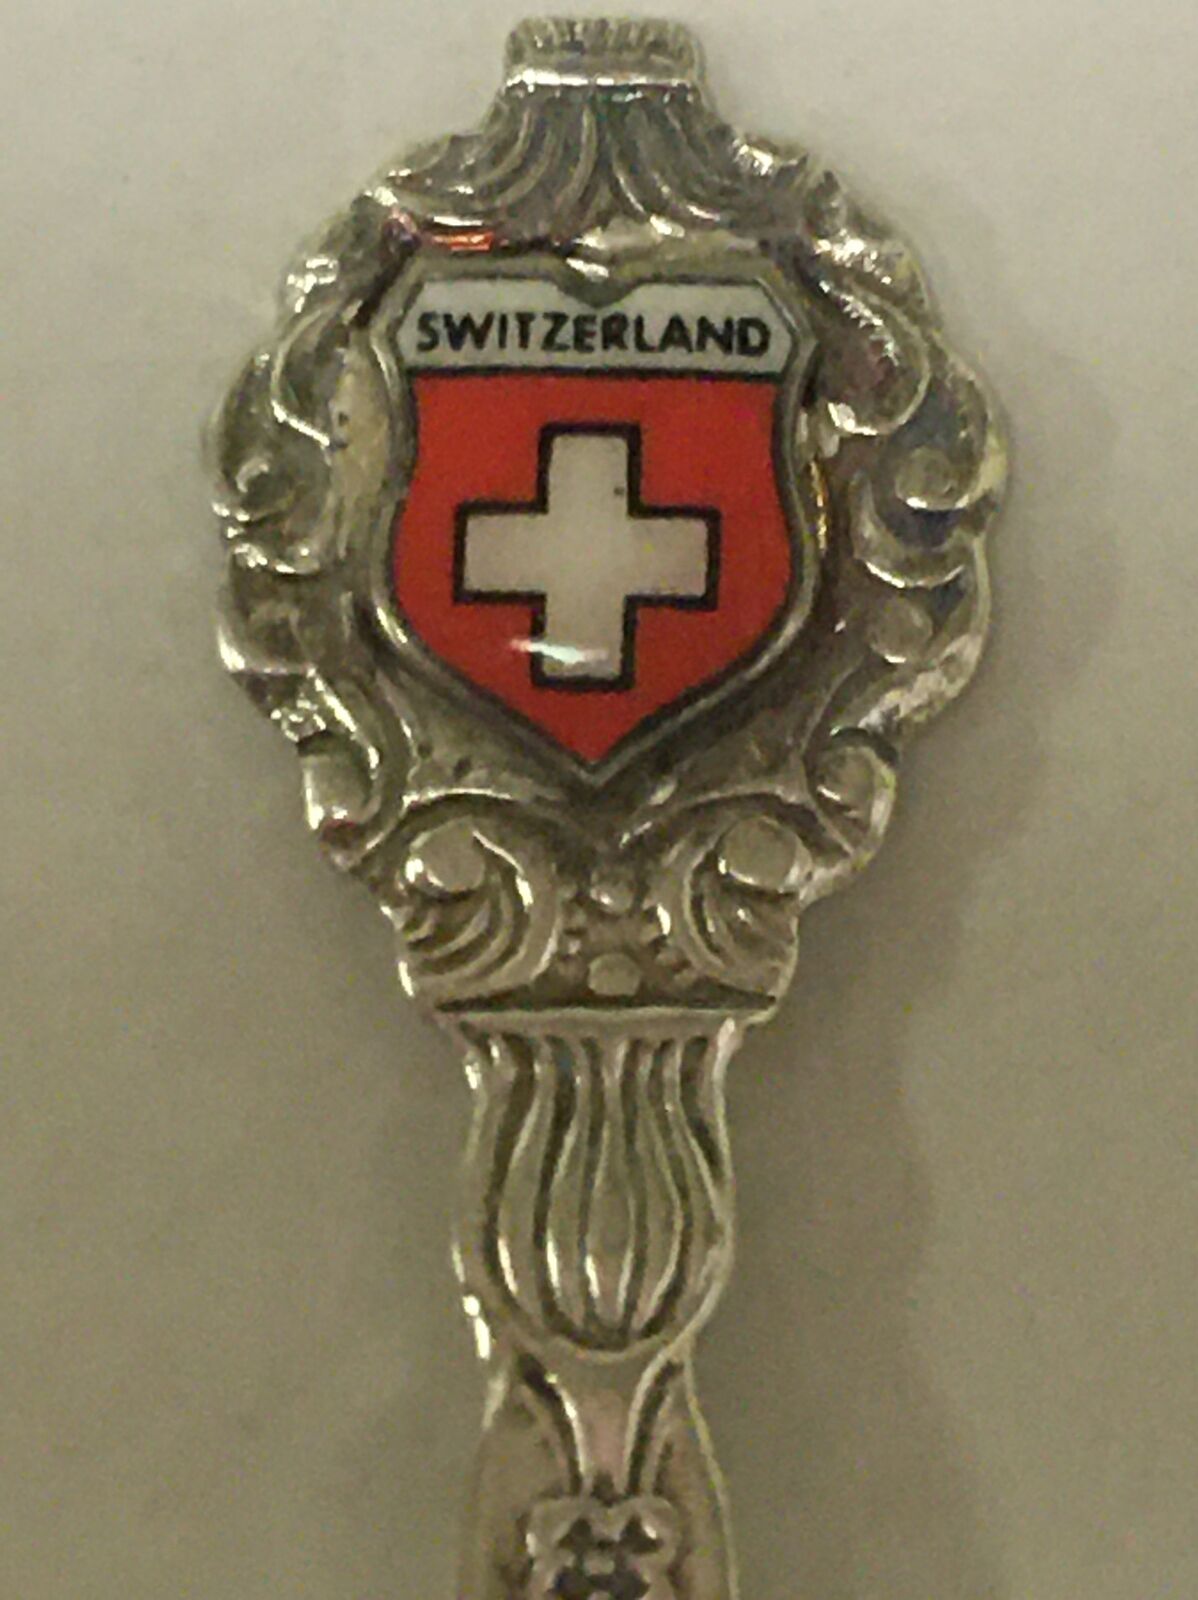 Switzerland Vintage Souvenir Spoon Collectible